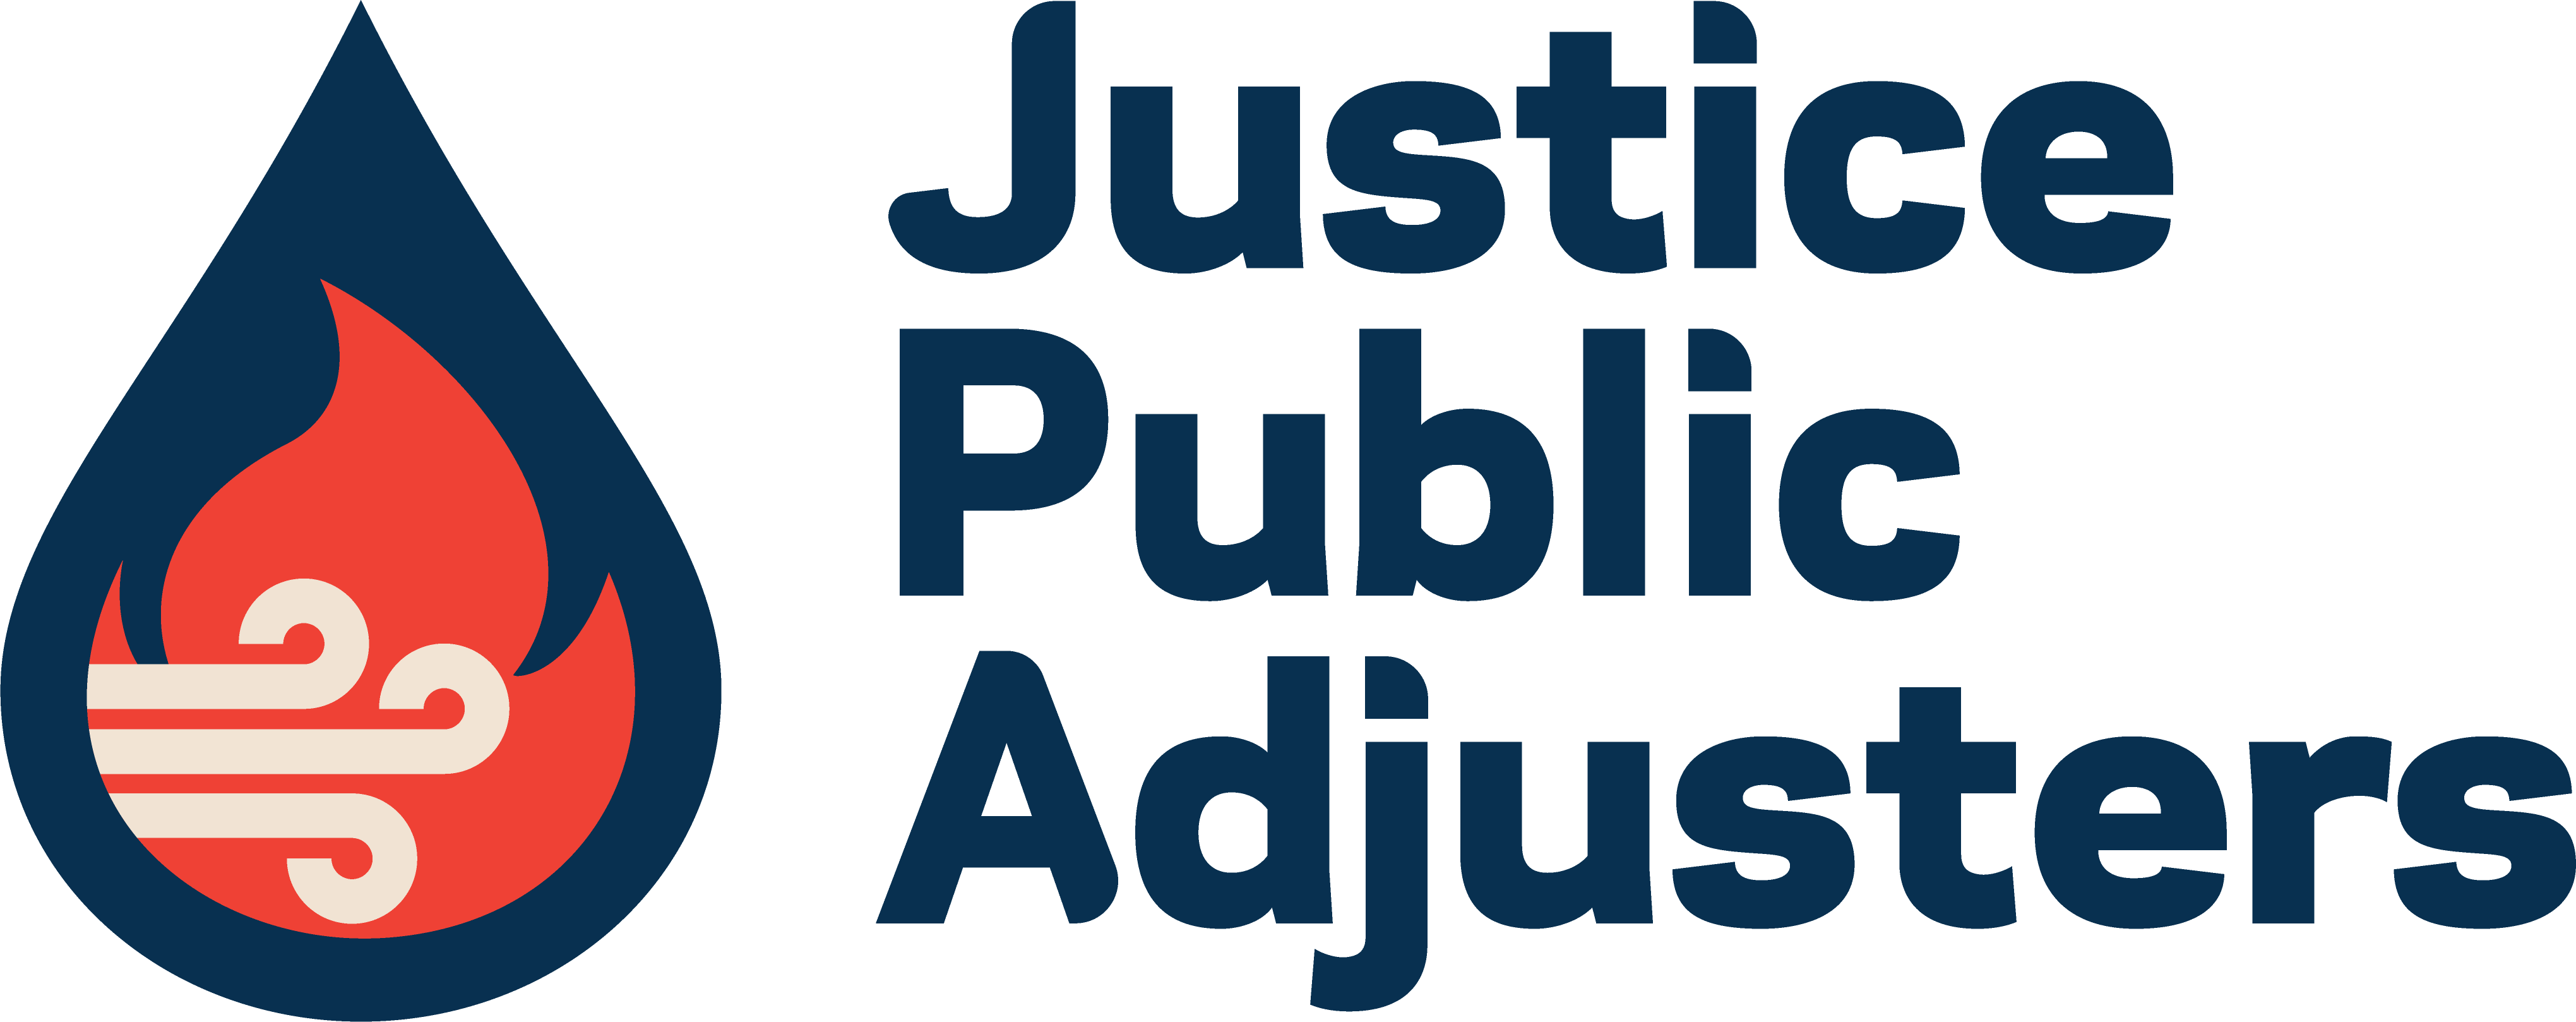 Justice Public Adjusters